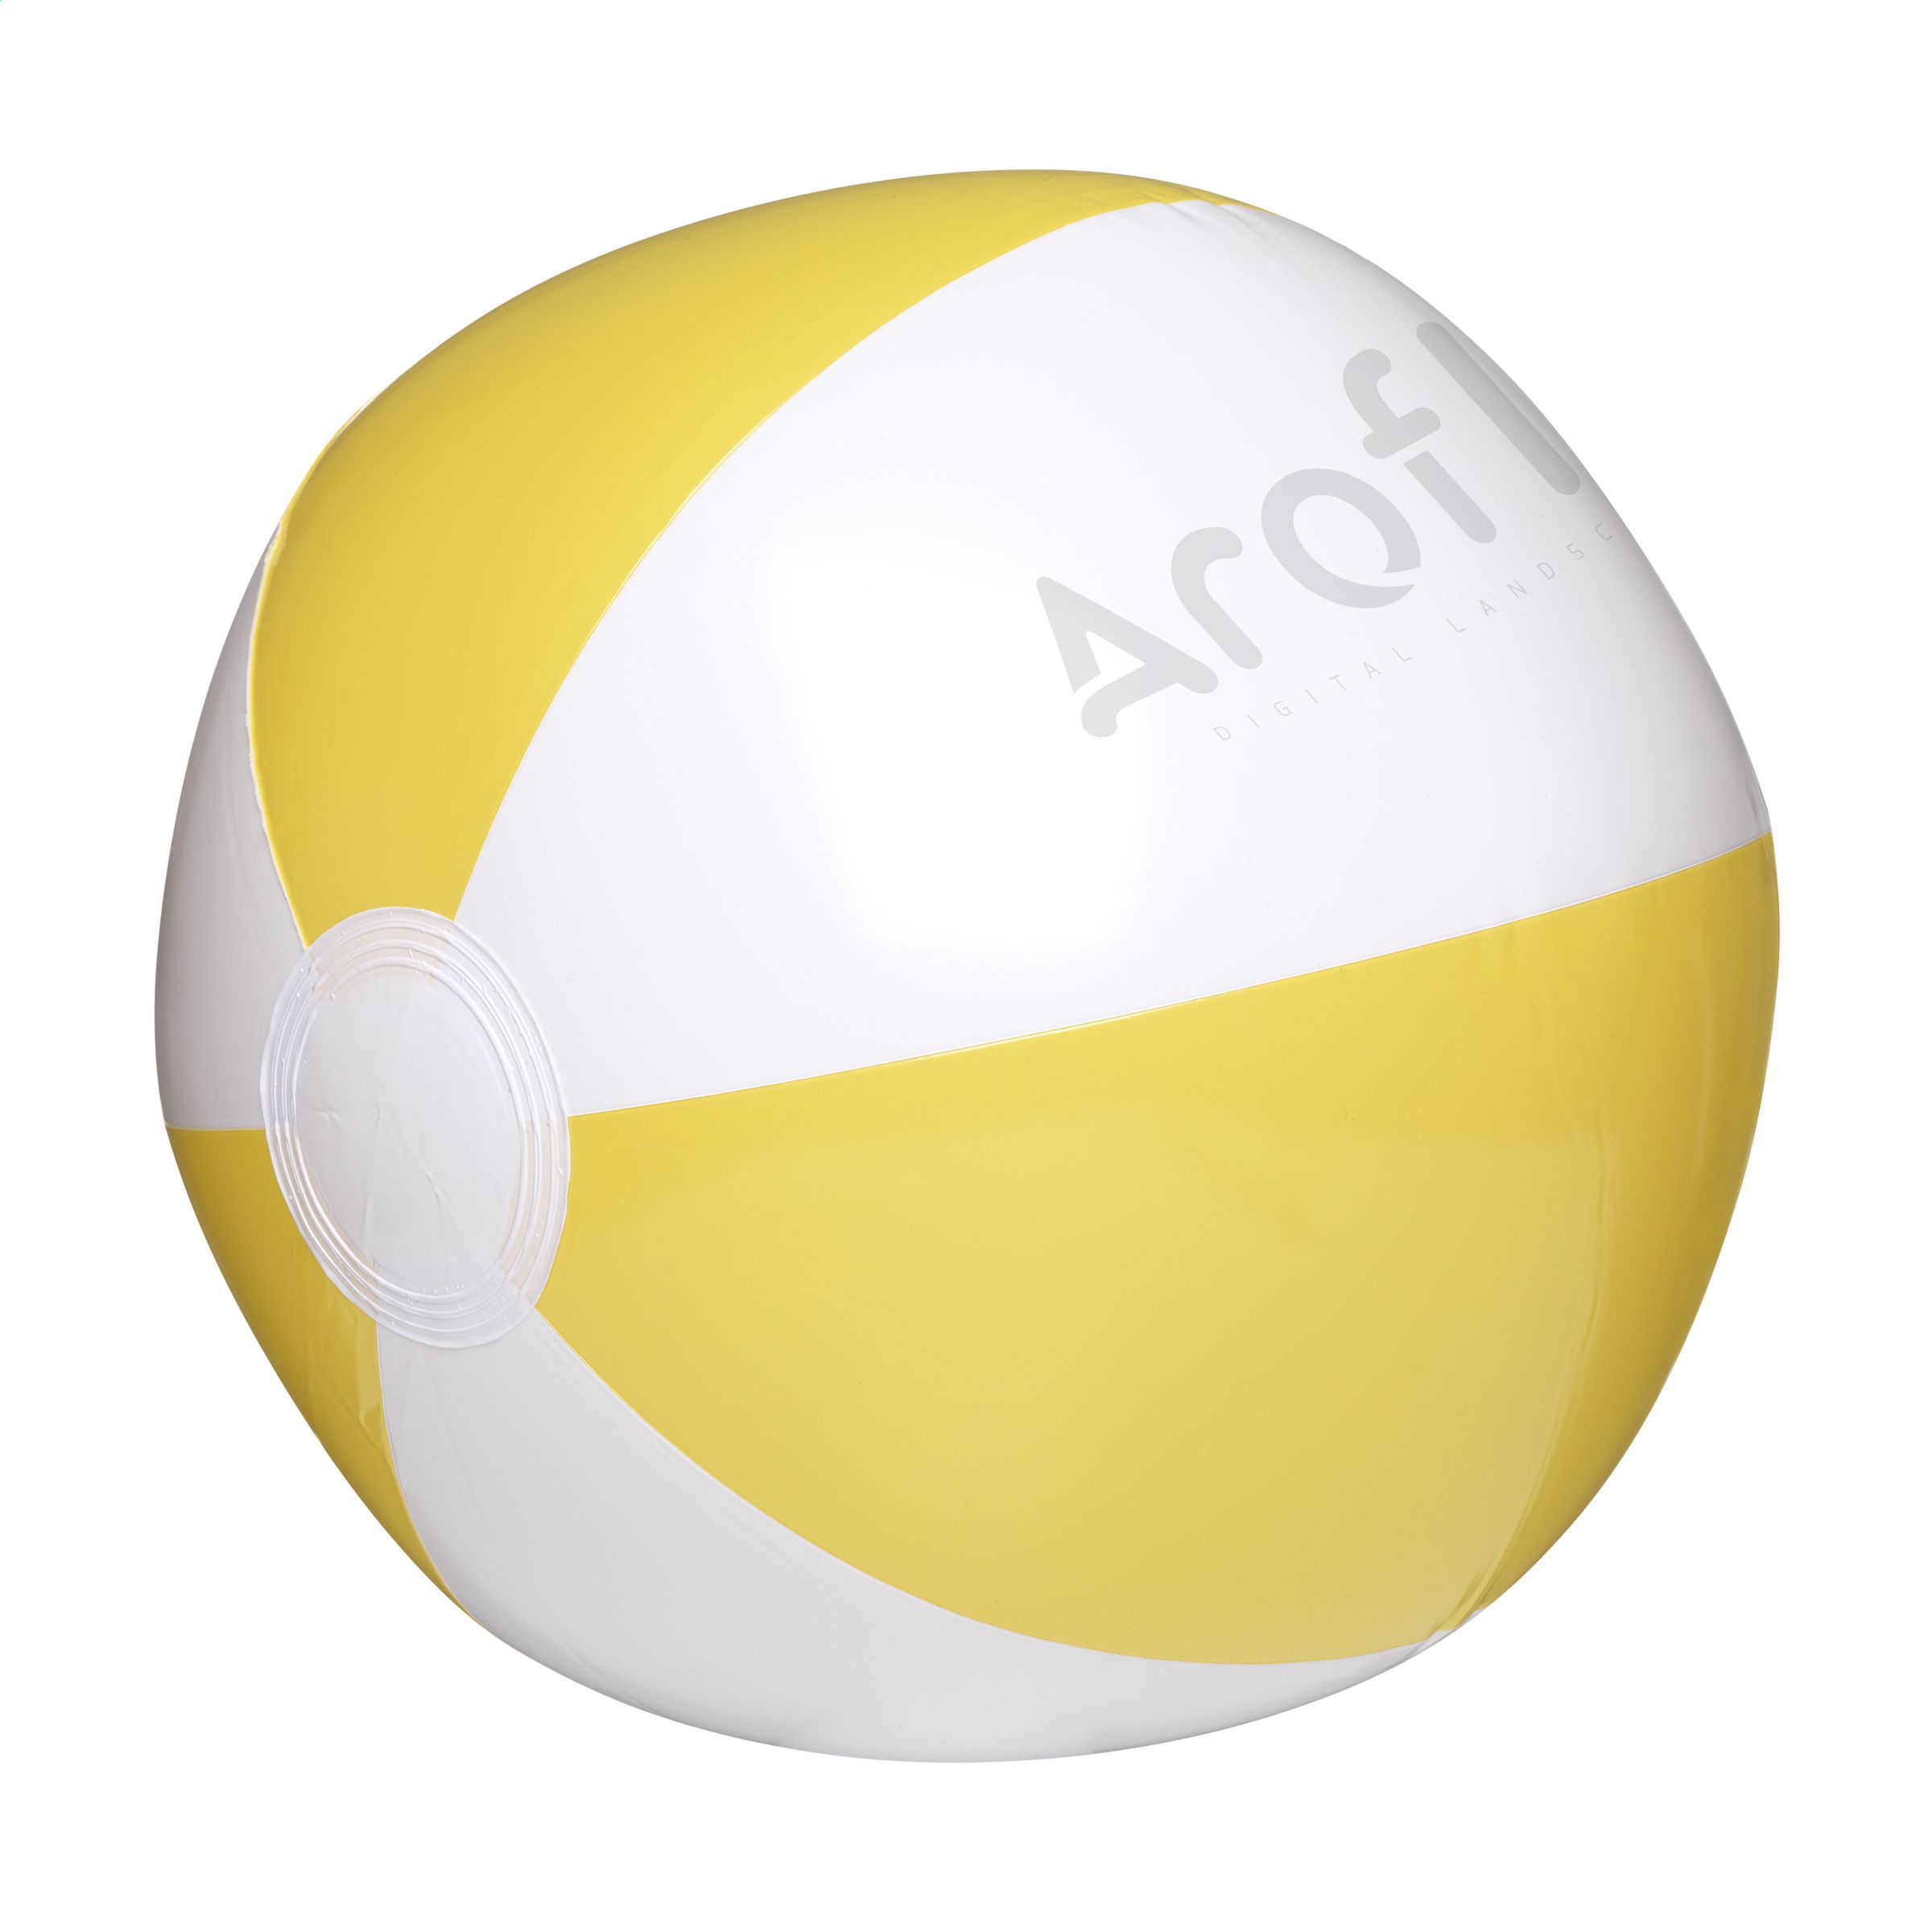 Inflatable Beach Ball - Askrigg